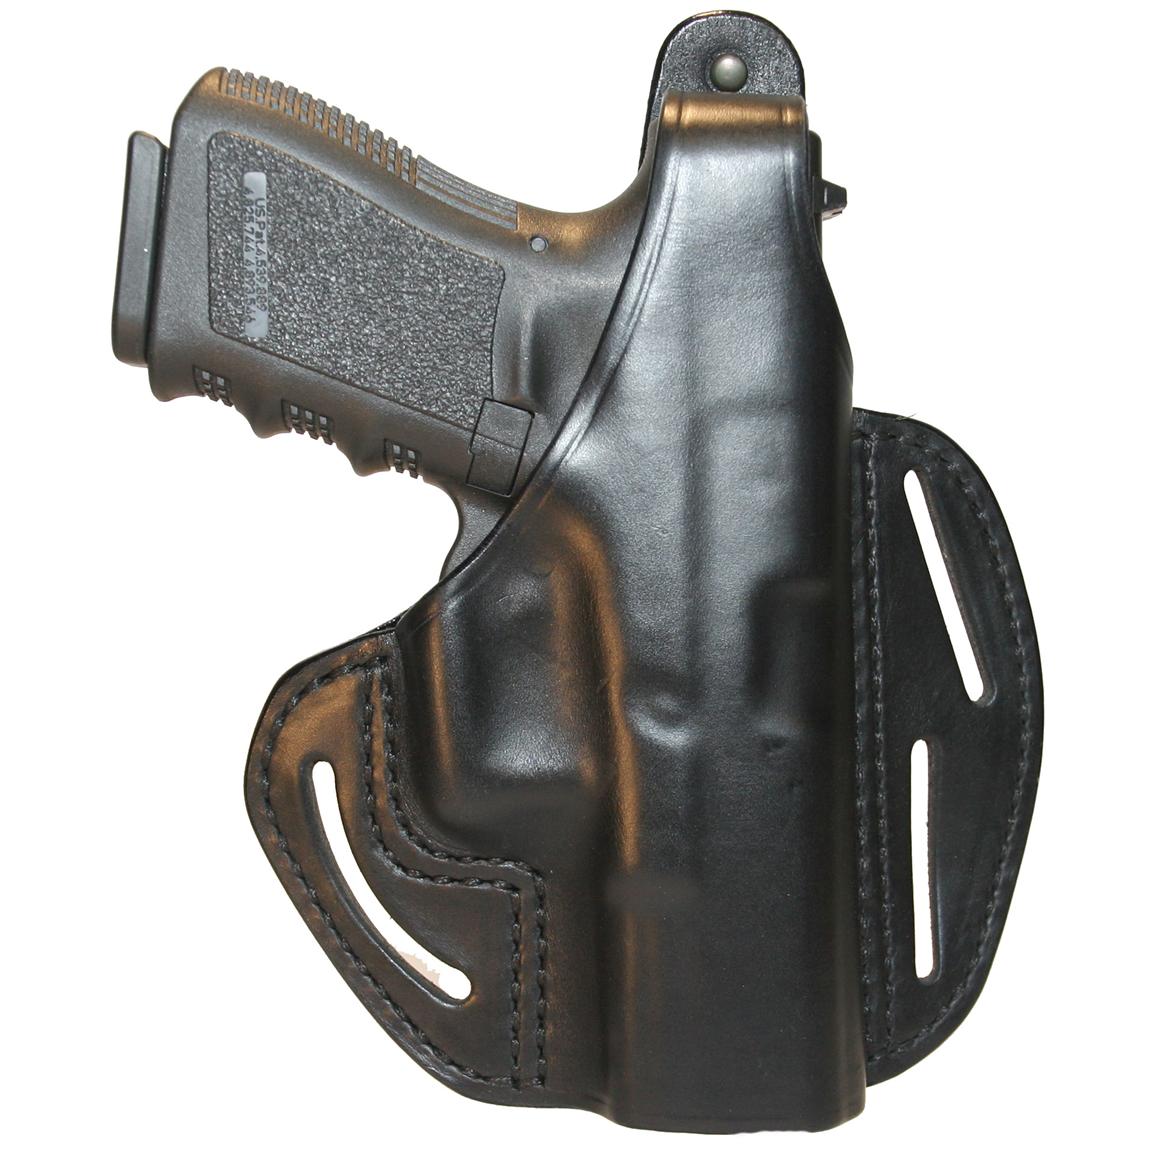 Details about   Blackhawk Leather Holster LEFT HAND Glock 20-21 3 Slot Pancake Italy NEW 